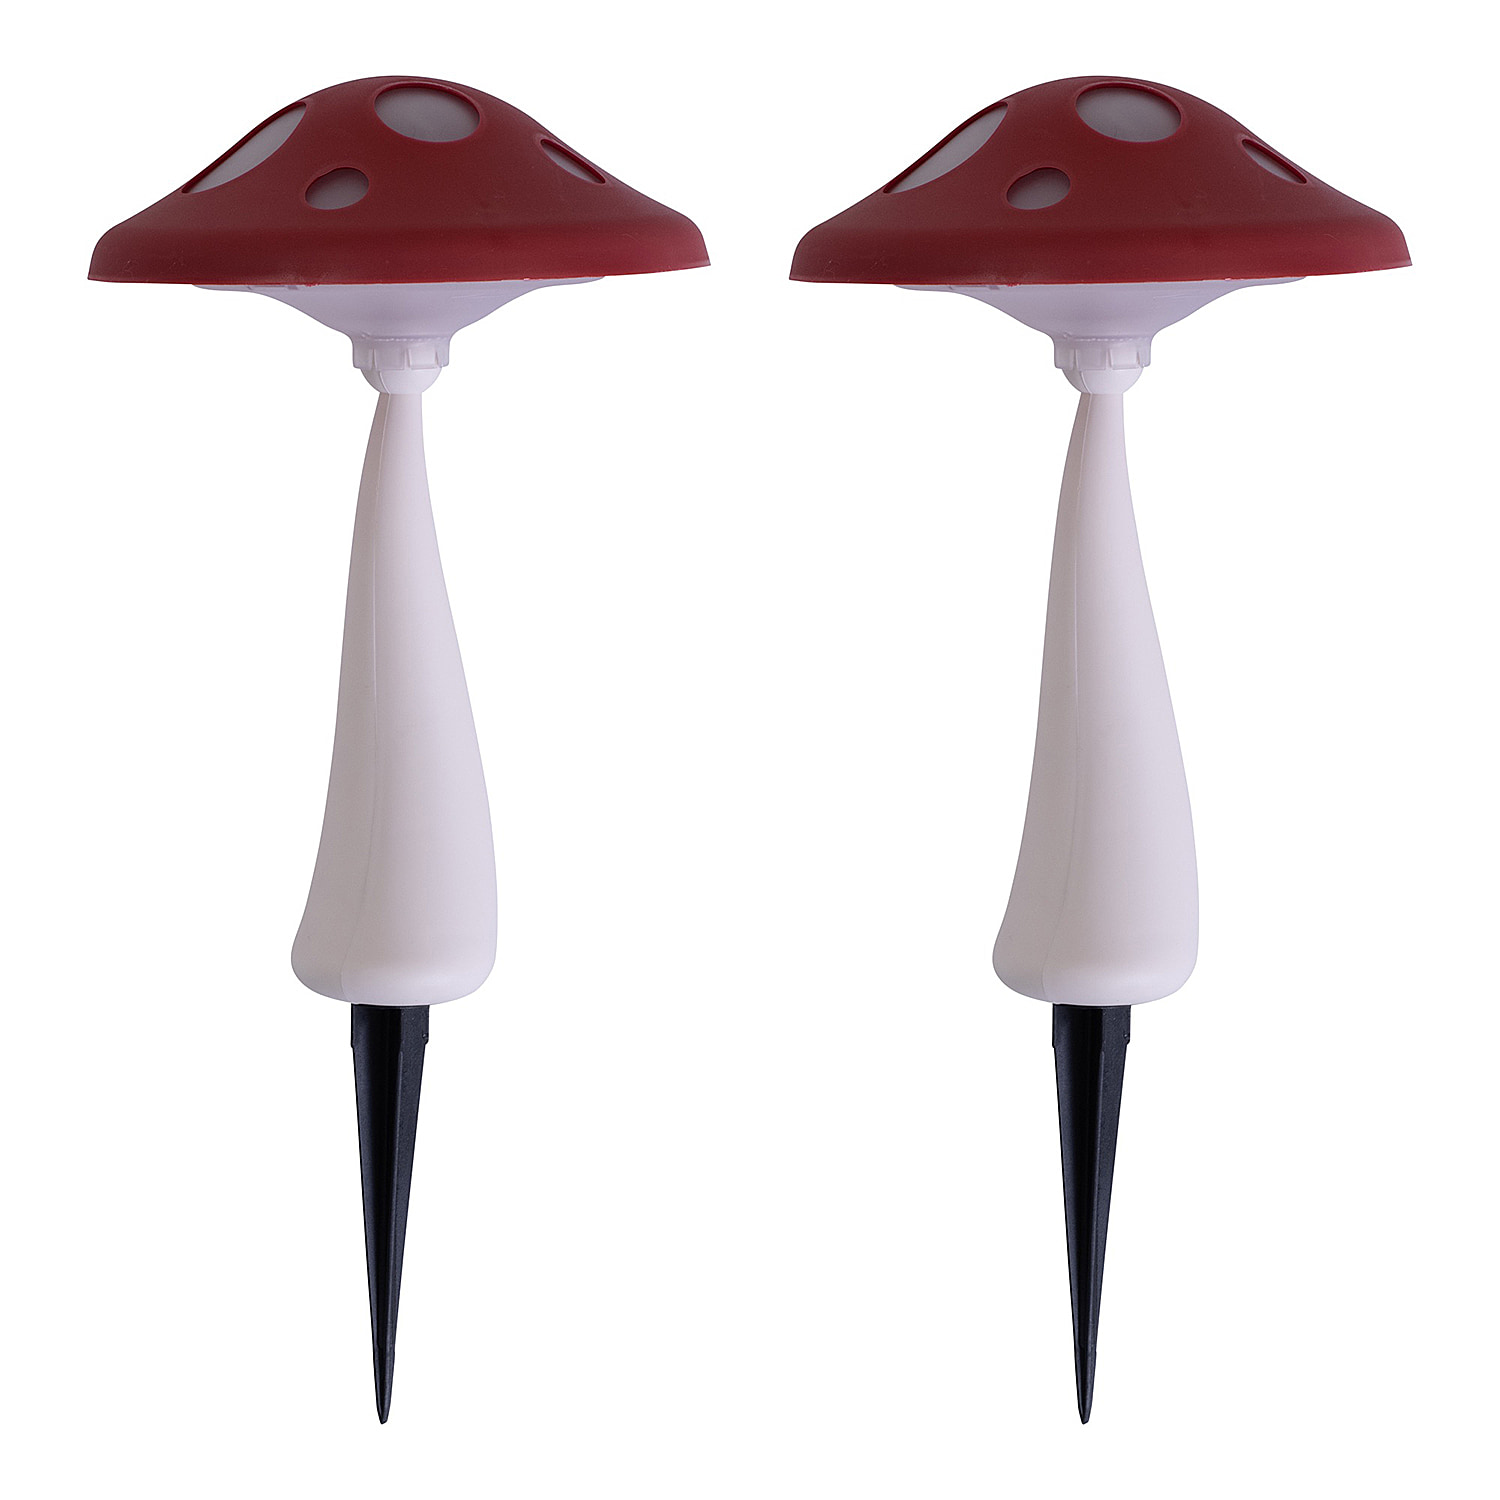 Set of 2 - Red Mushroom Pathway Solar Garden Lights - Red & White